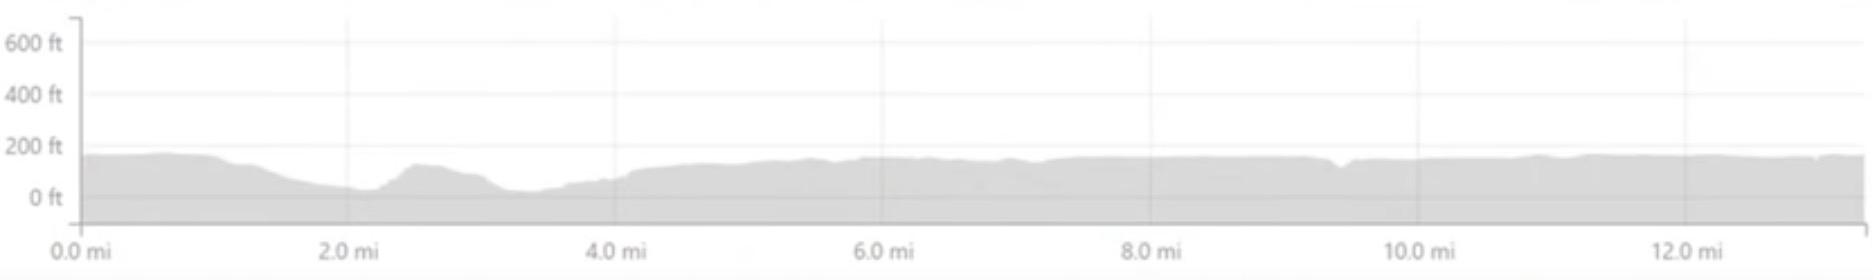 Colchester Half Marathon Elevation Profile